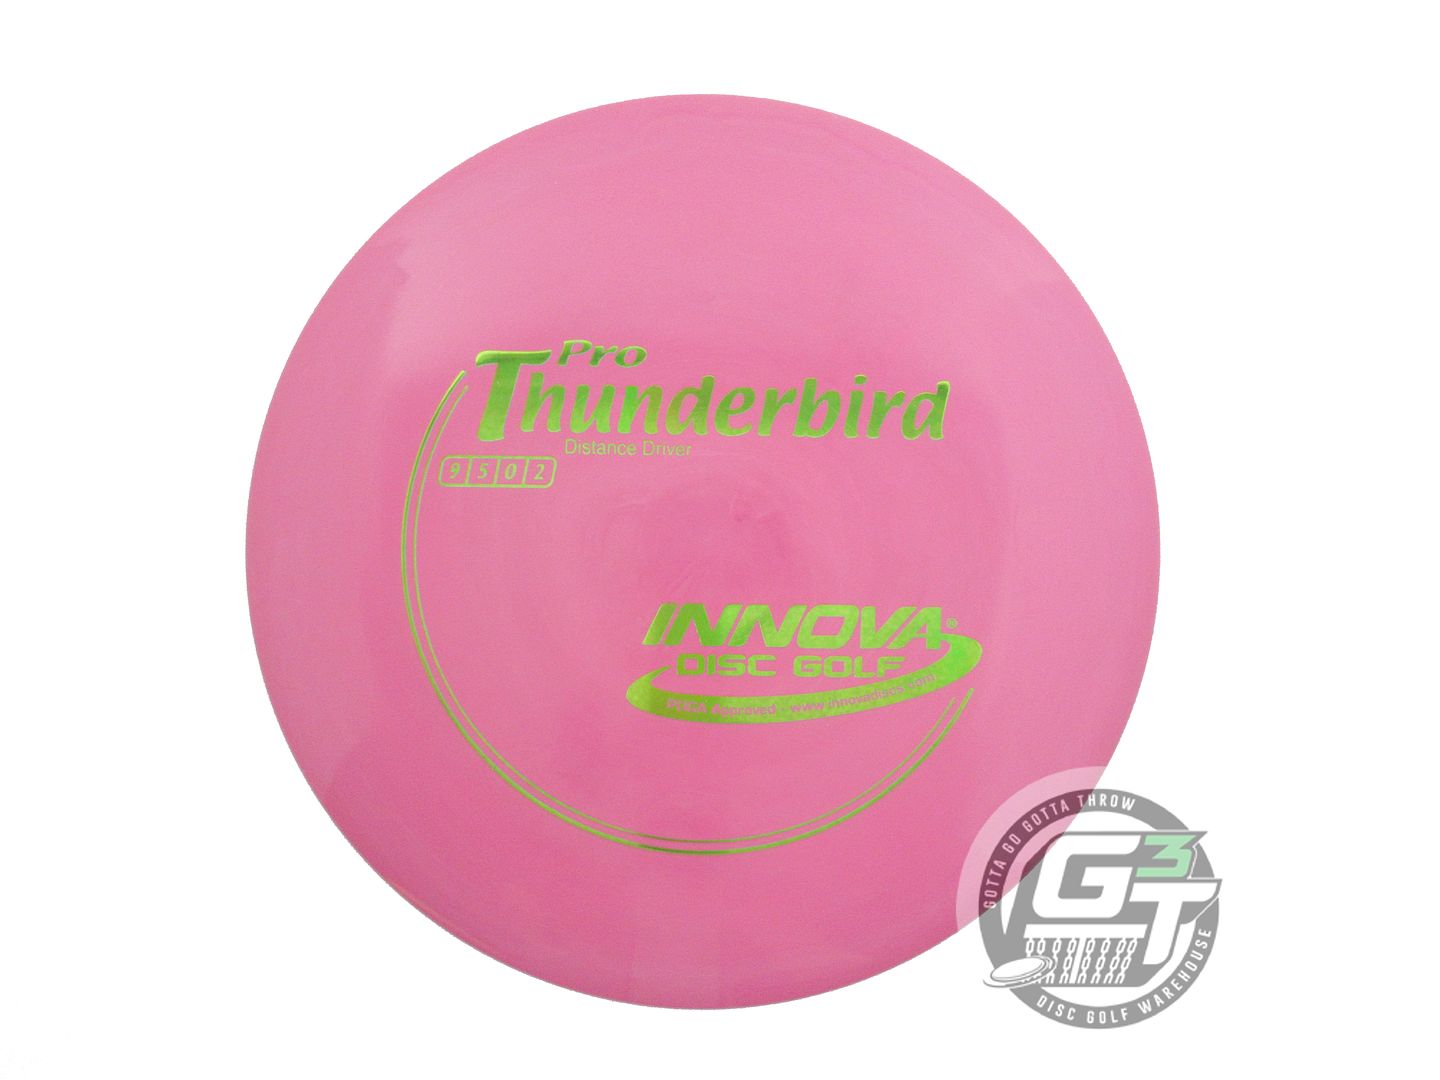 Innova Pro Thunderbird Distance Driver Golf Disc (Individually Listed)